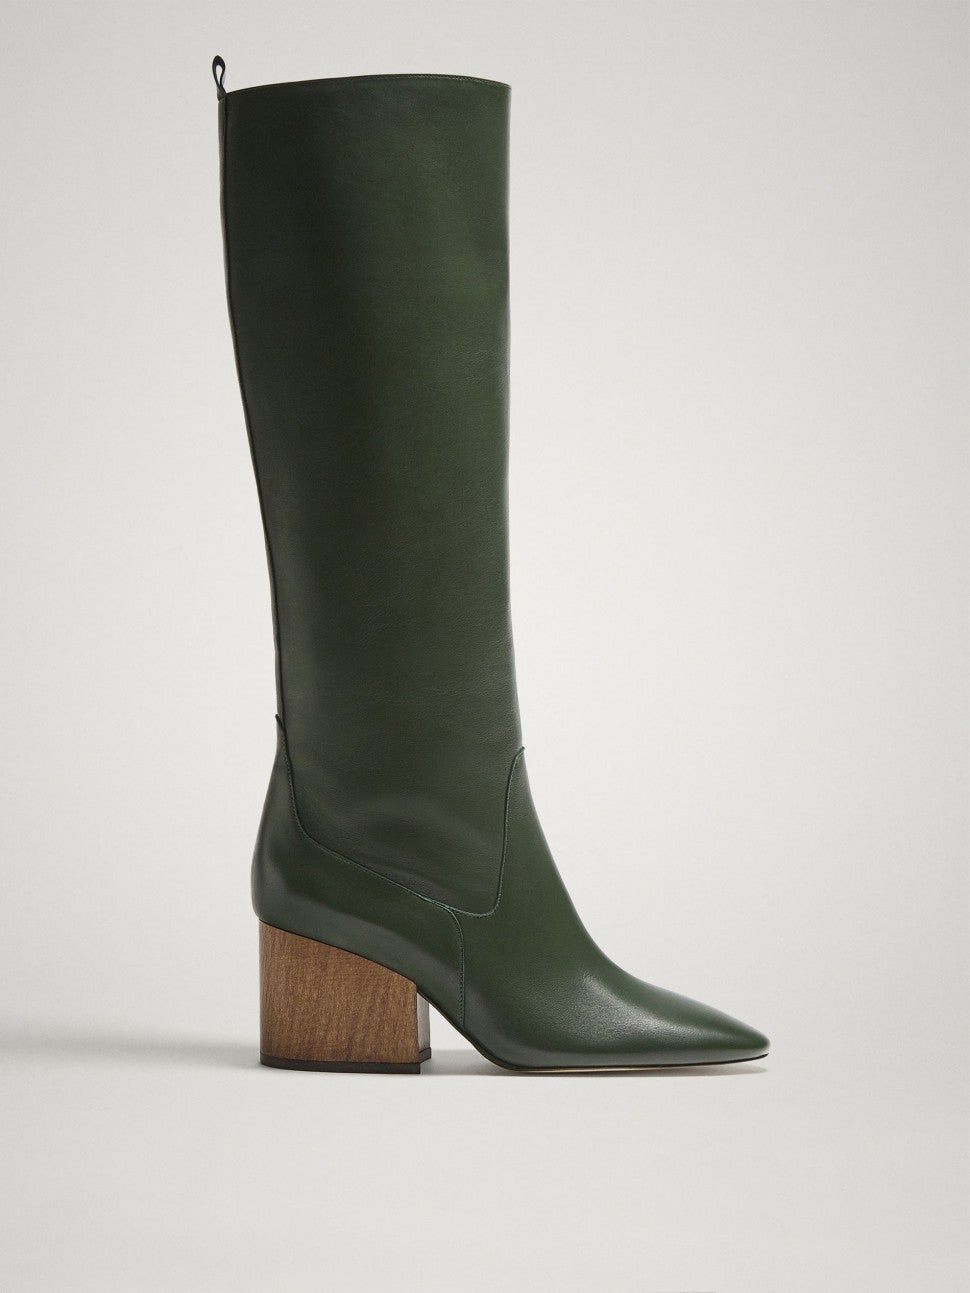 Massimo Dutti green knee boots